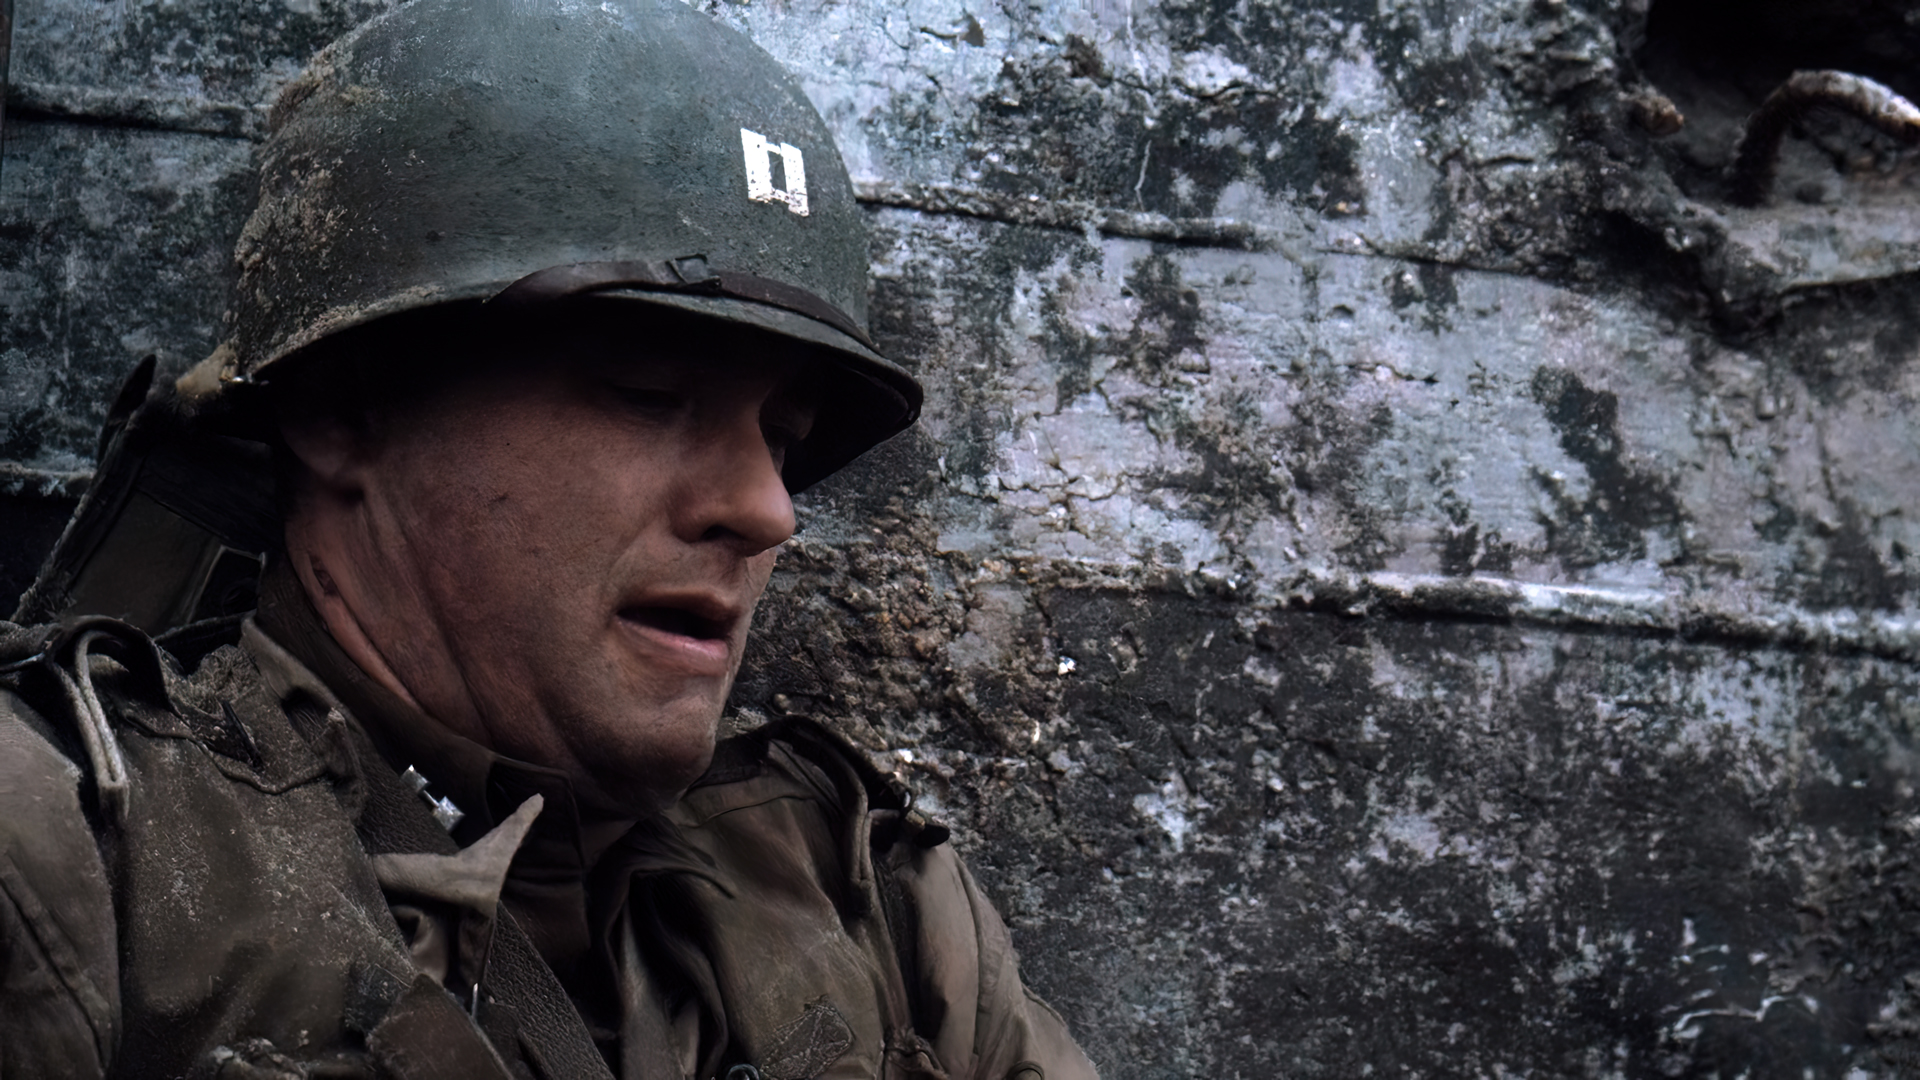 People 1920x1080 Saving Private Ryan movies film stills Tom Hanks actor helmet World War II D-Day soldier Steven Spielberg